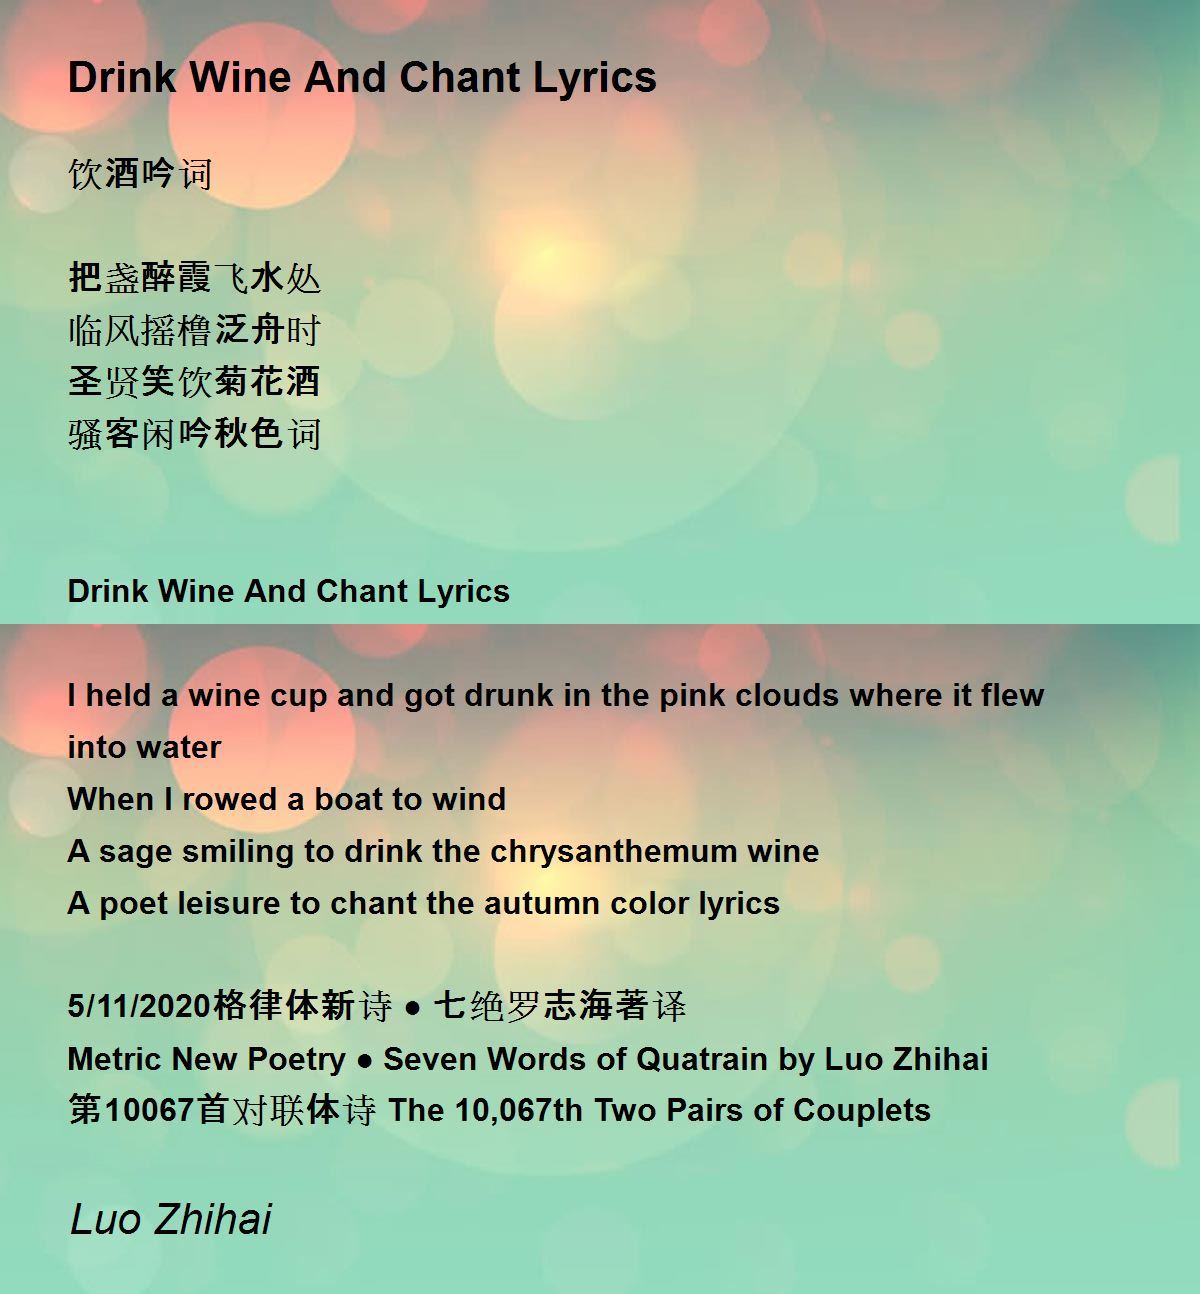 Drink Wine And Chant Lyrics Poem by Luo Zhihai - Poem Hunter